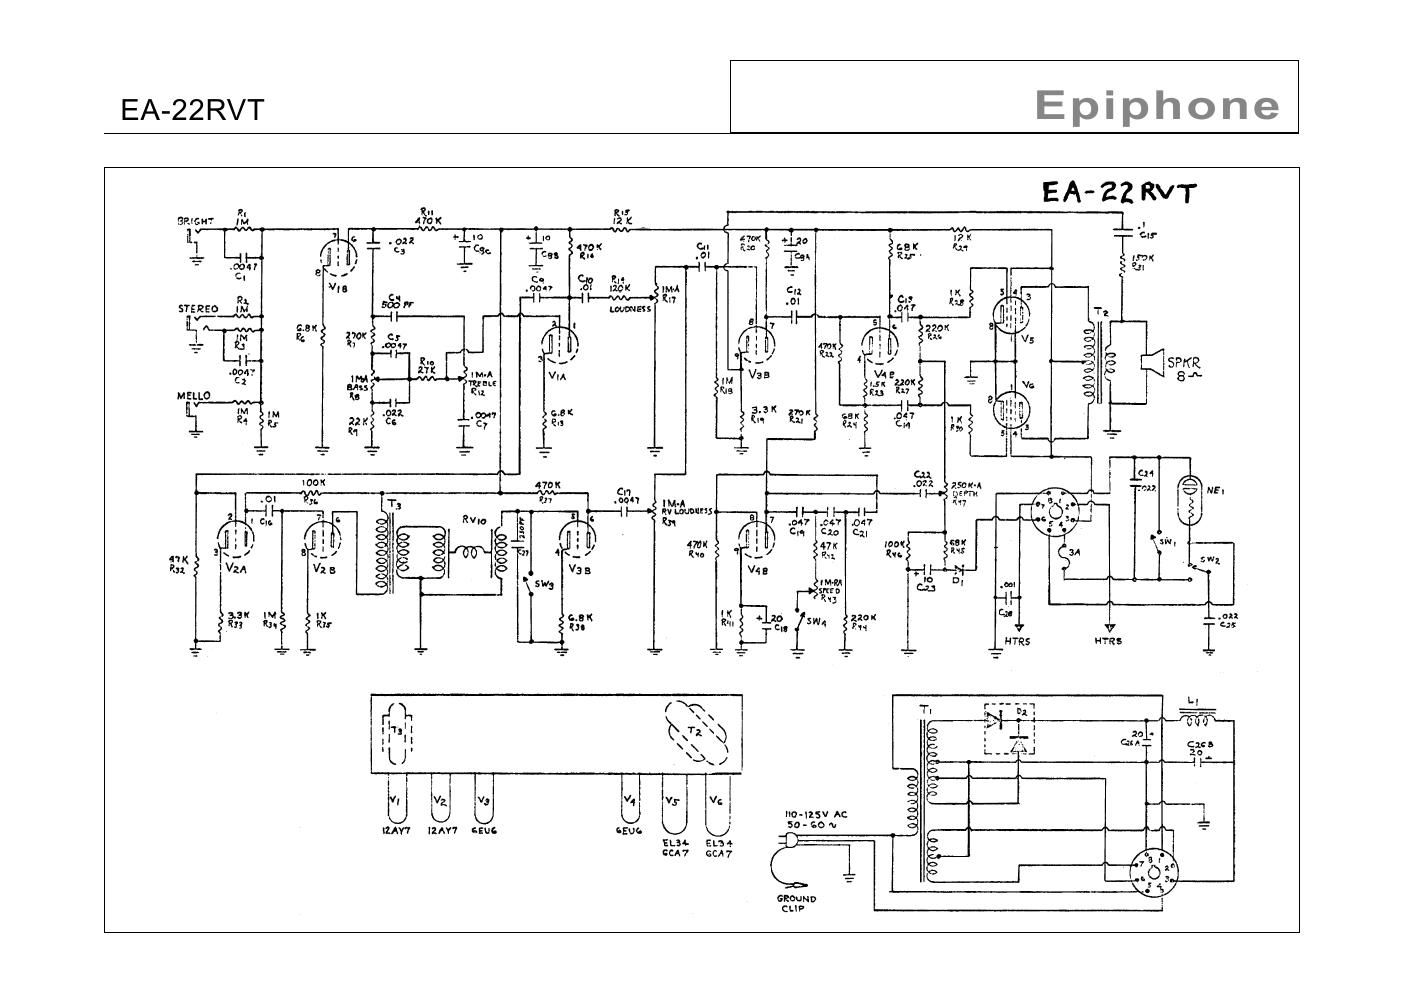 epiphone ea 22rvt schematic